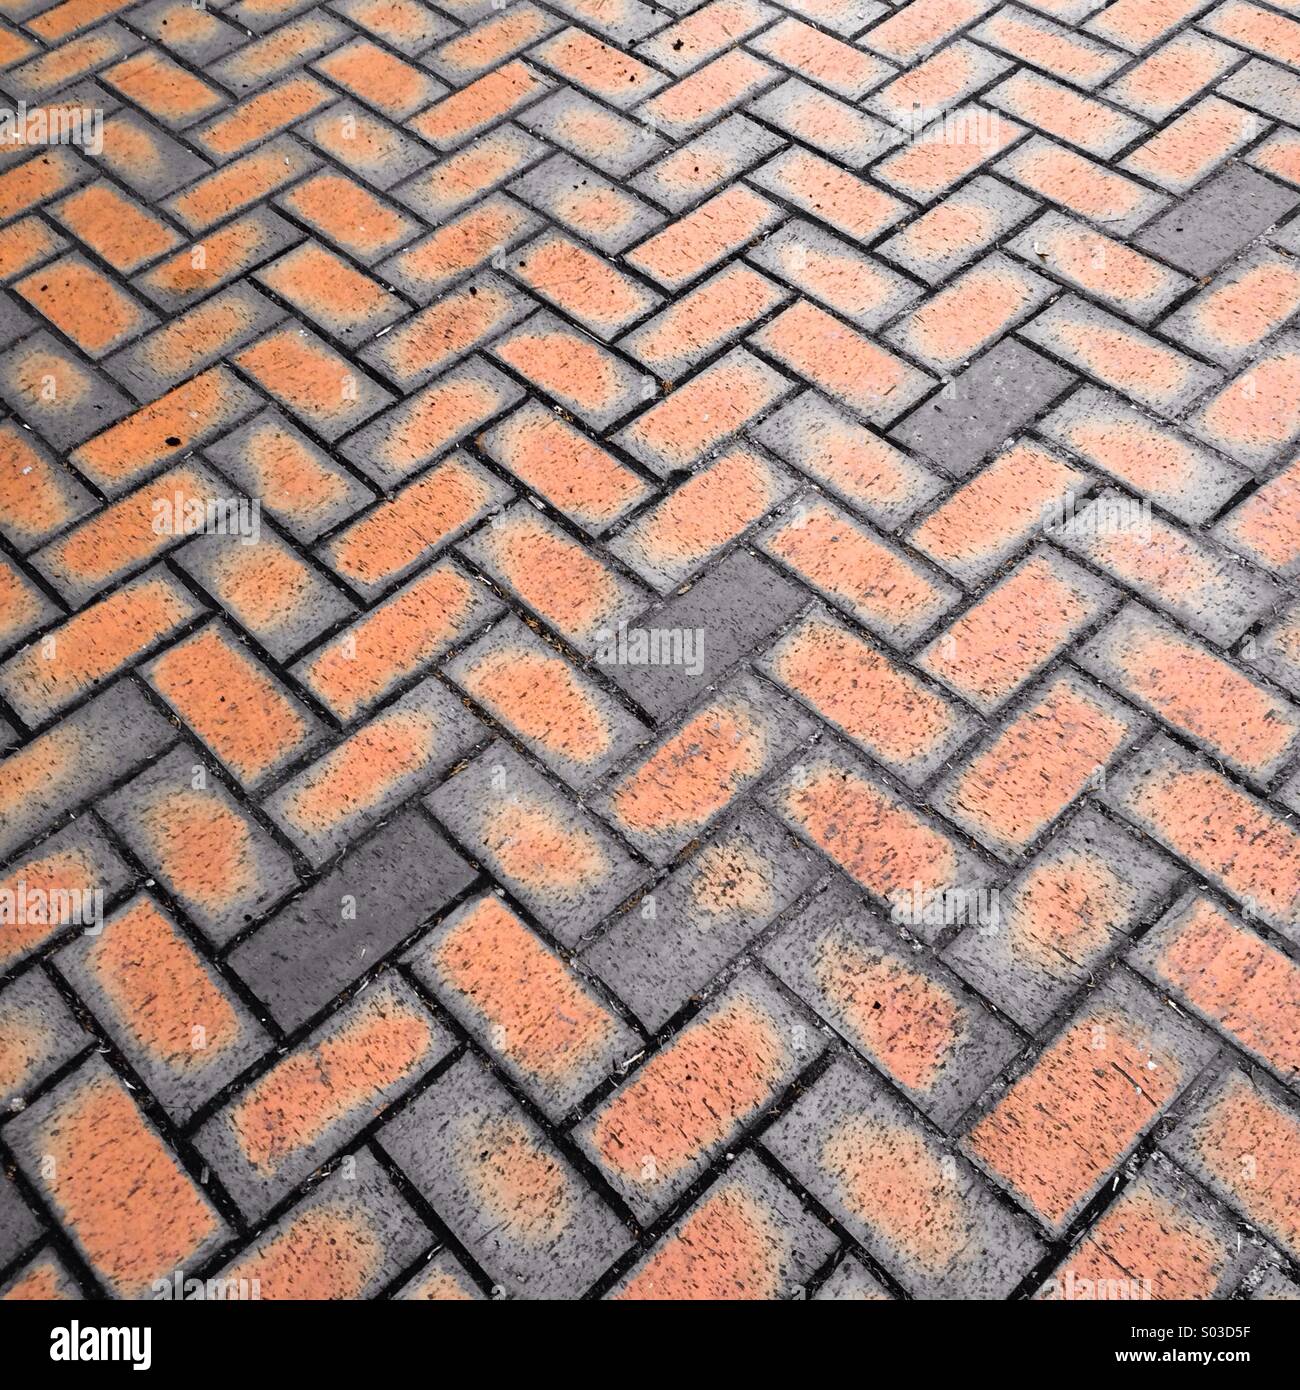 Floor tiles background Stock Photo